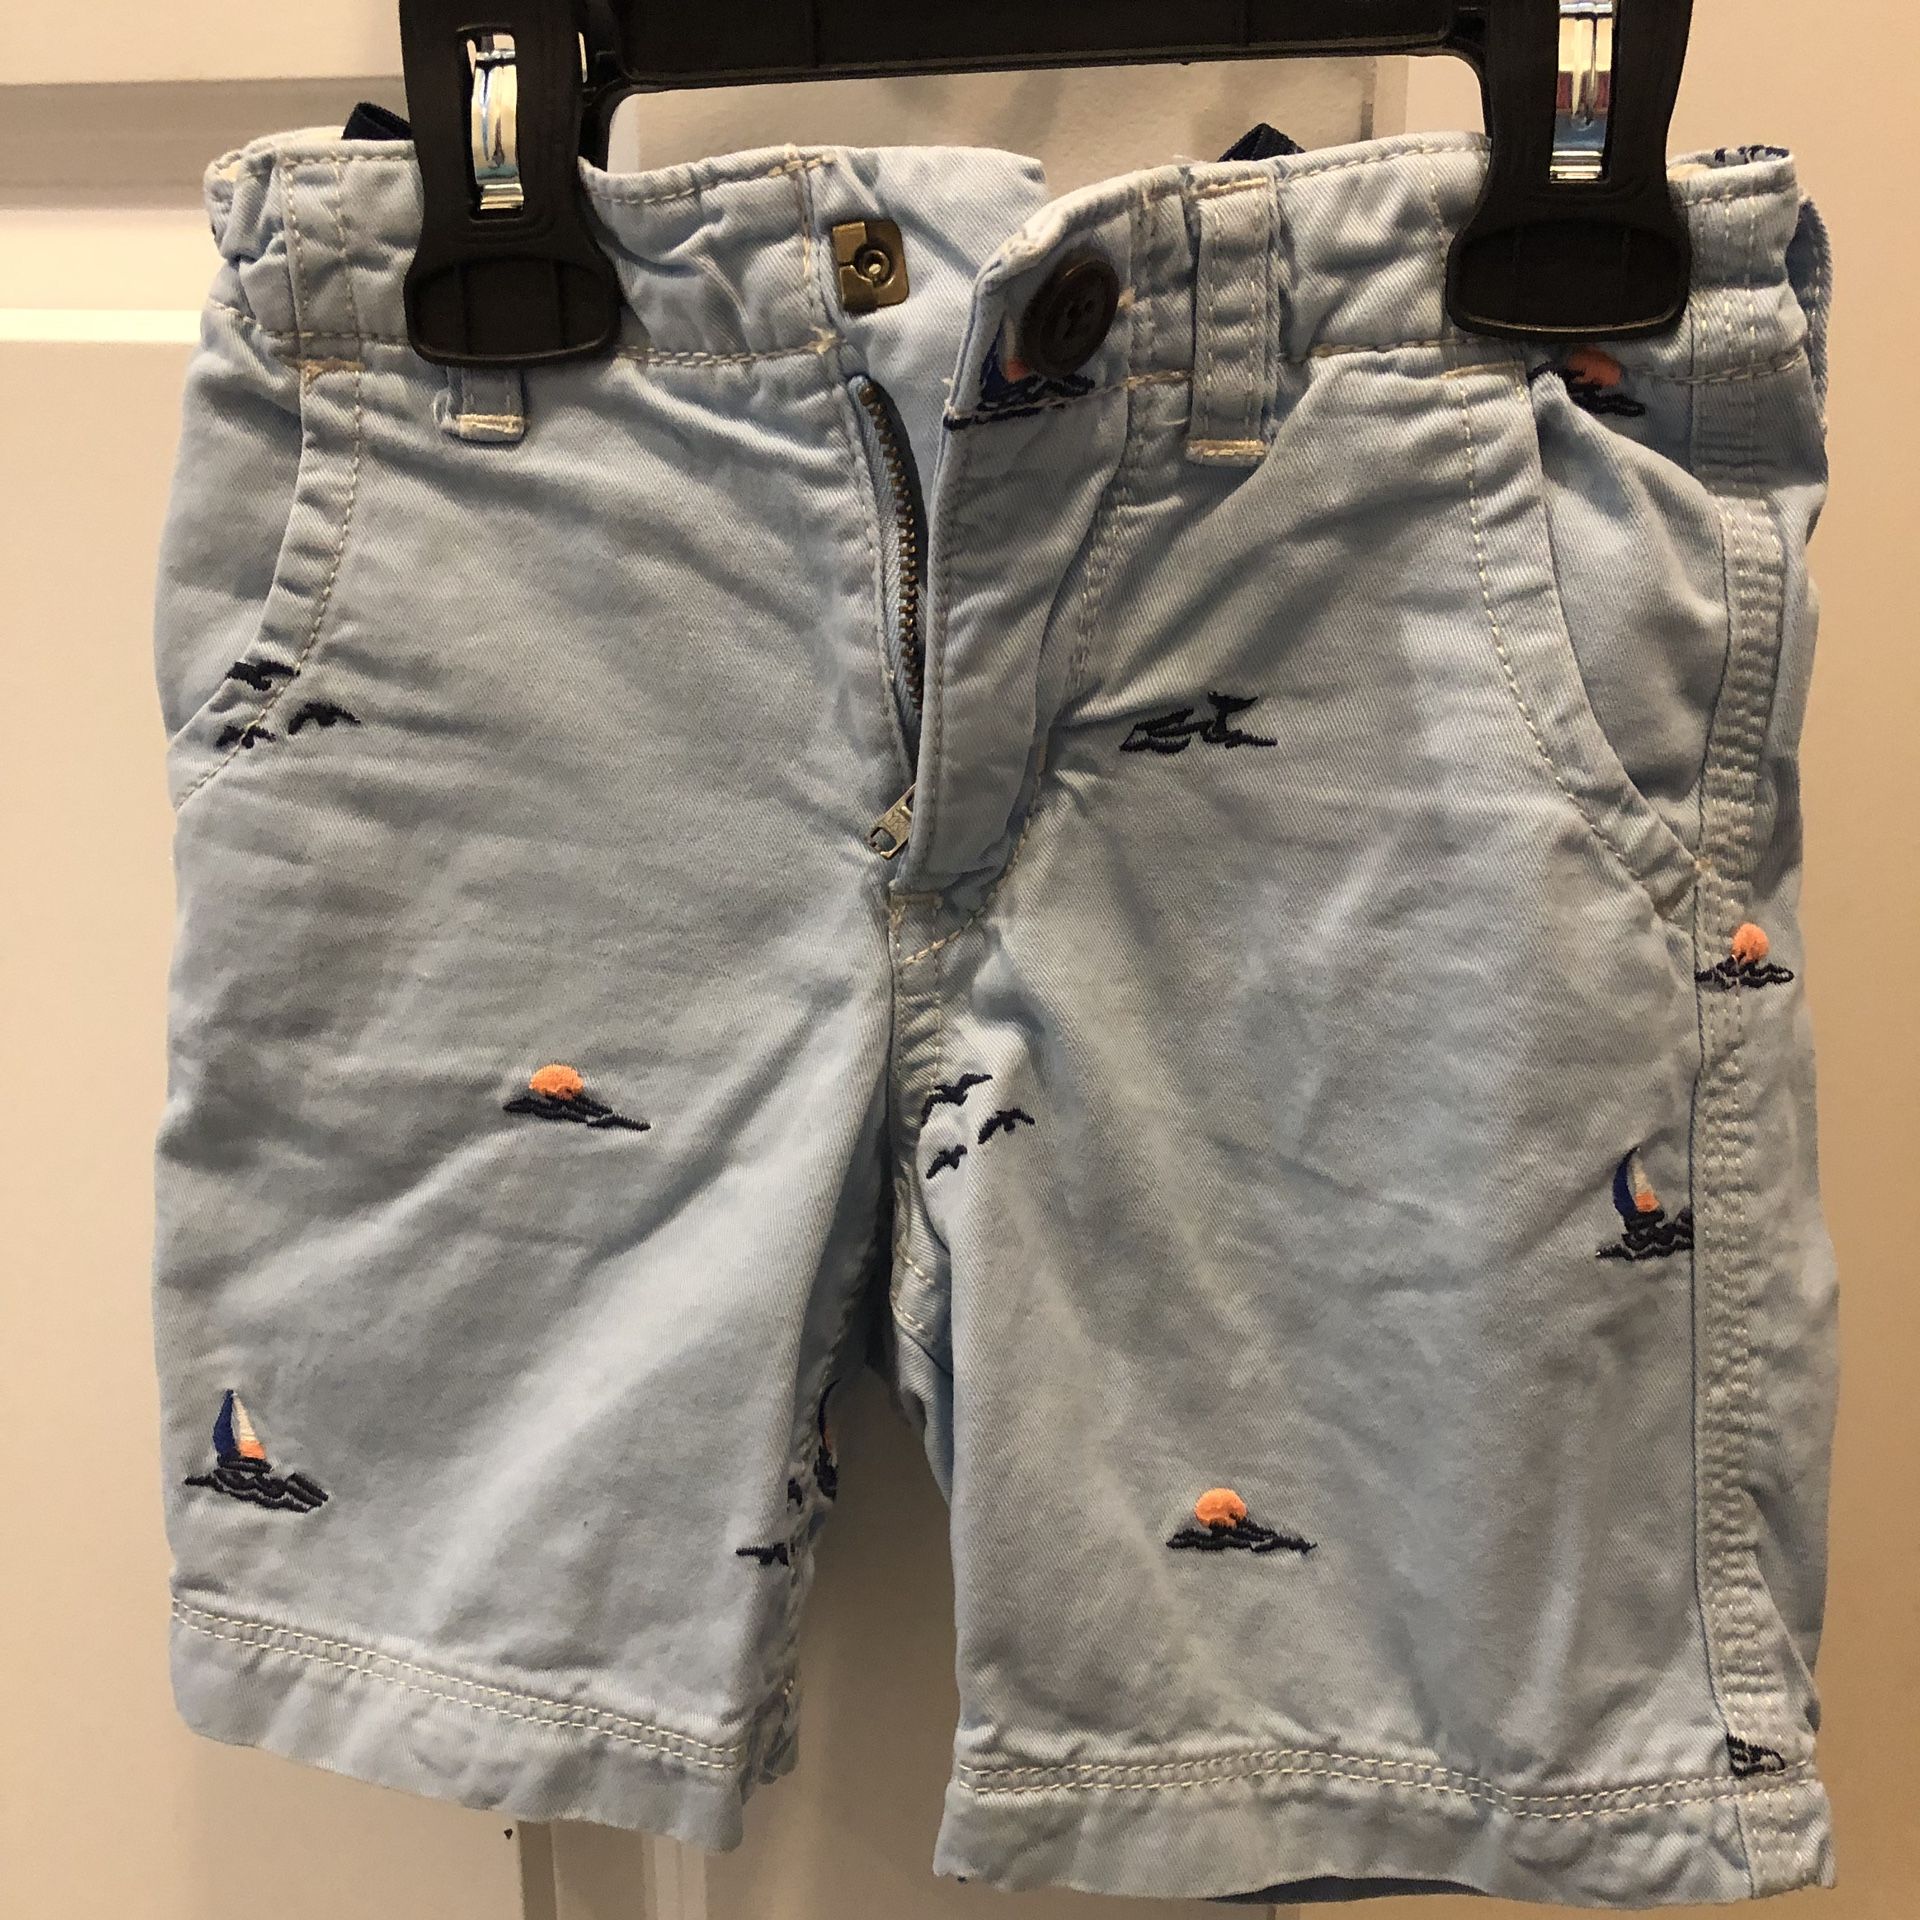 Baby Gap size 3T boy’s shorts